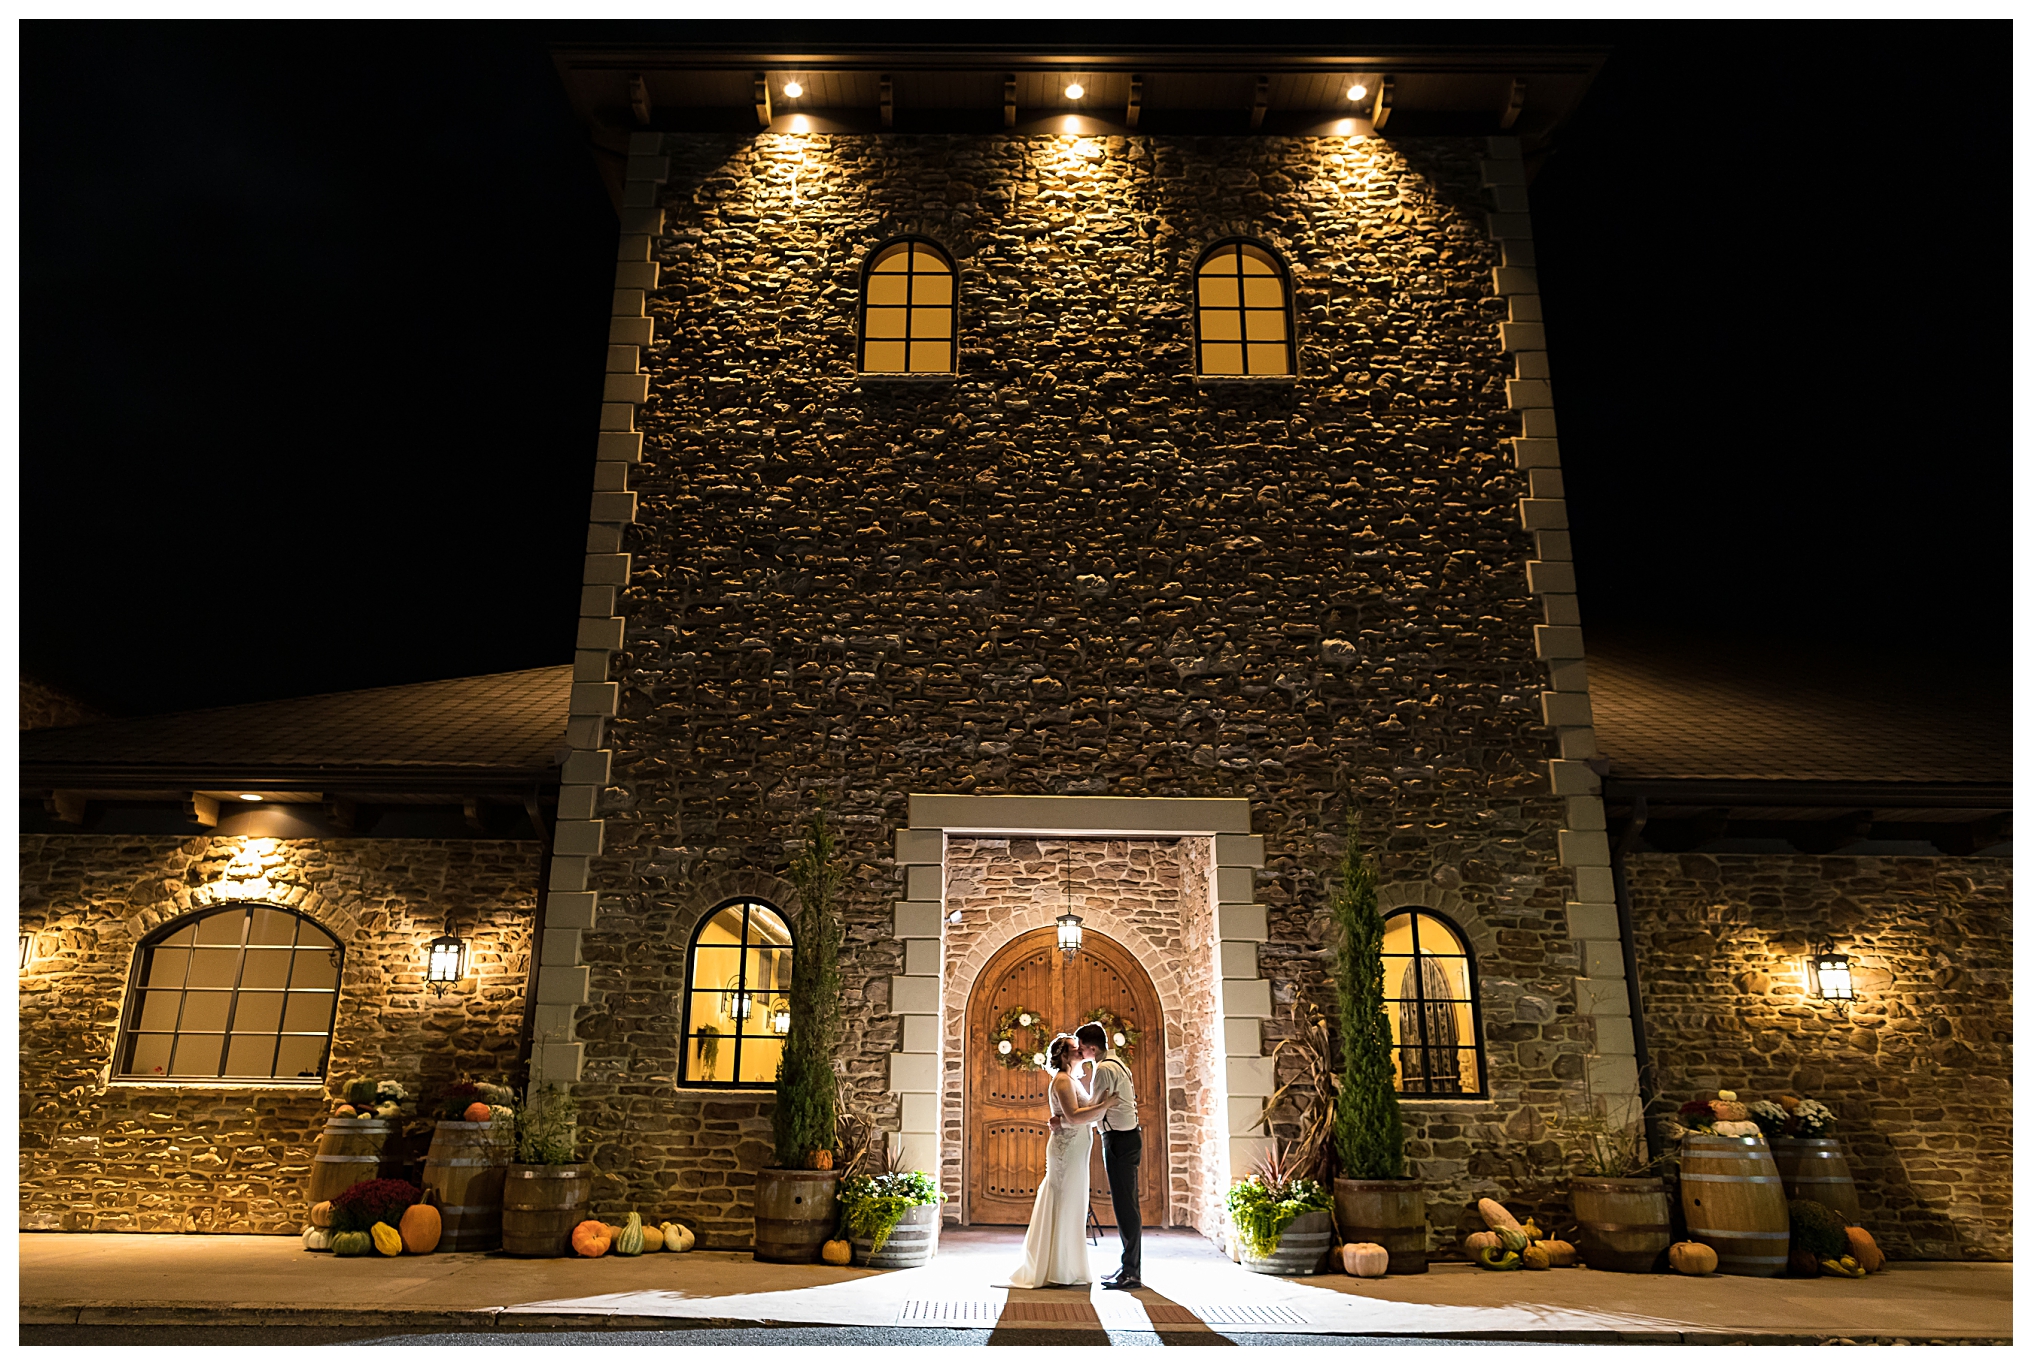 Folino winery wedding at night